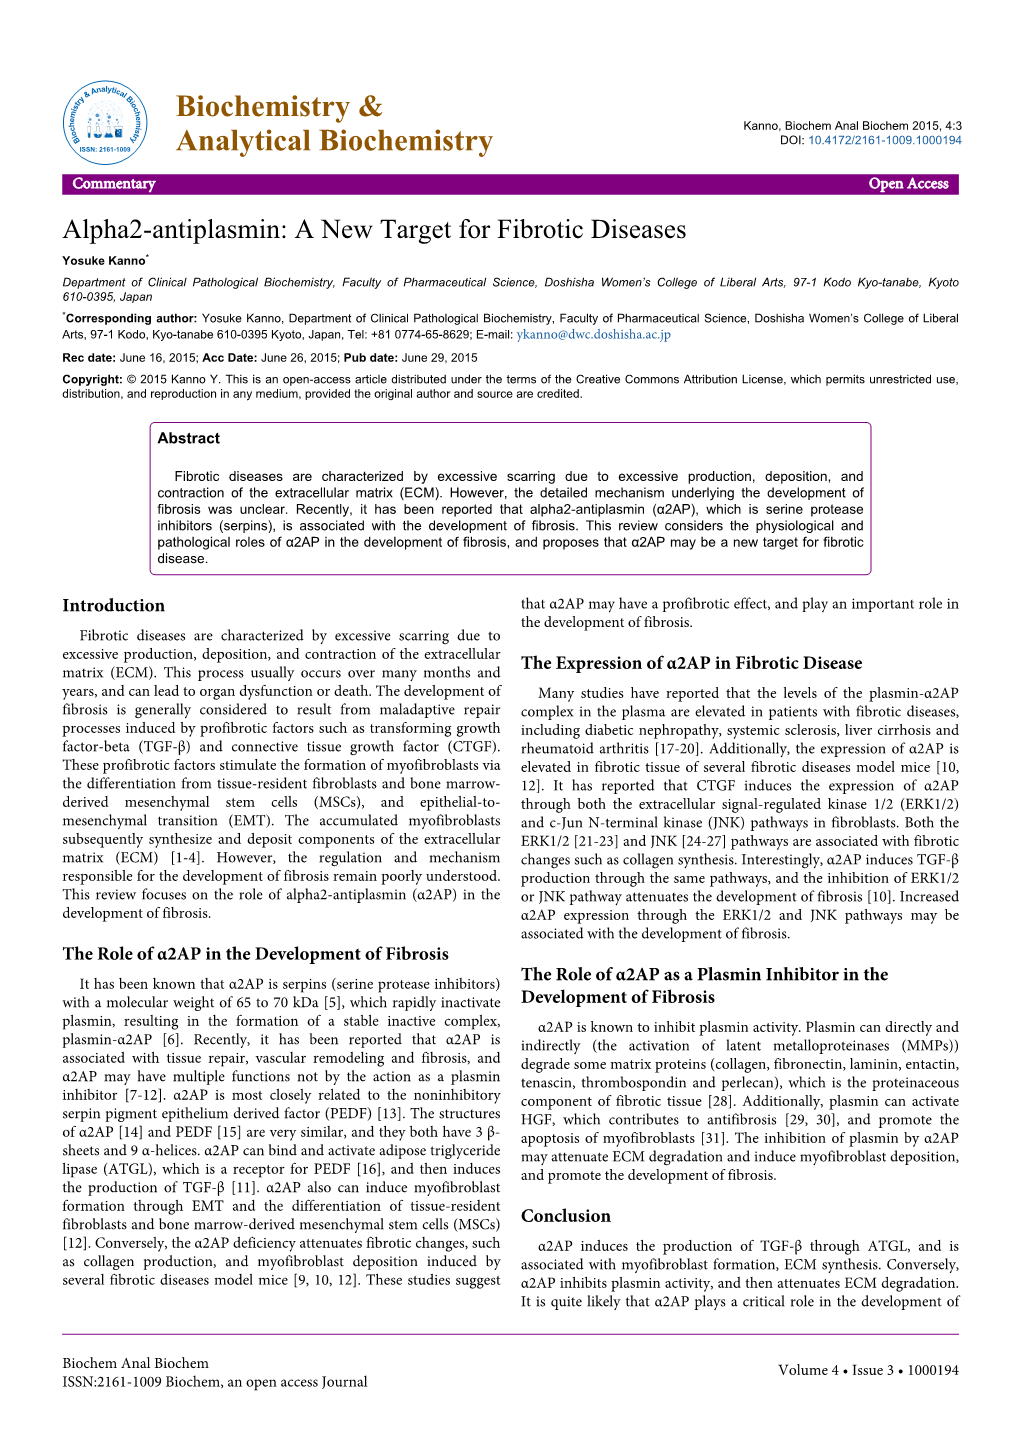 Alpha2-Antiplasmin: a New Target for Fibrotic Diseases